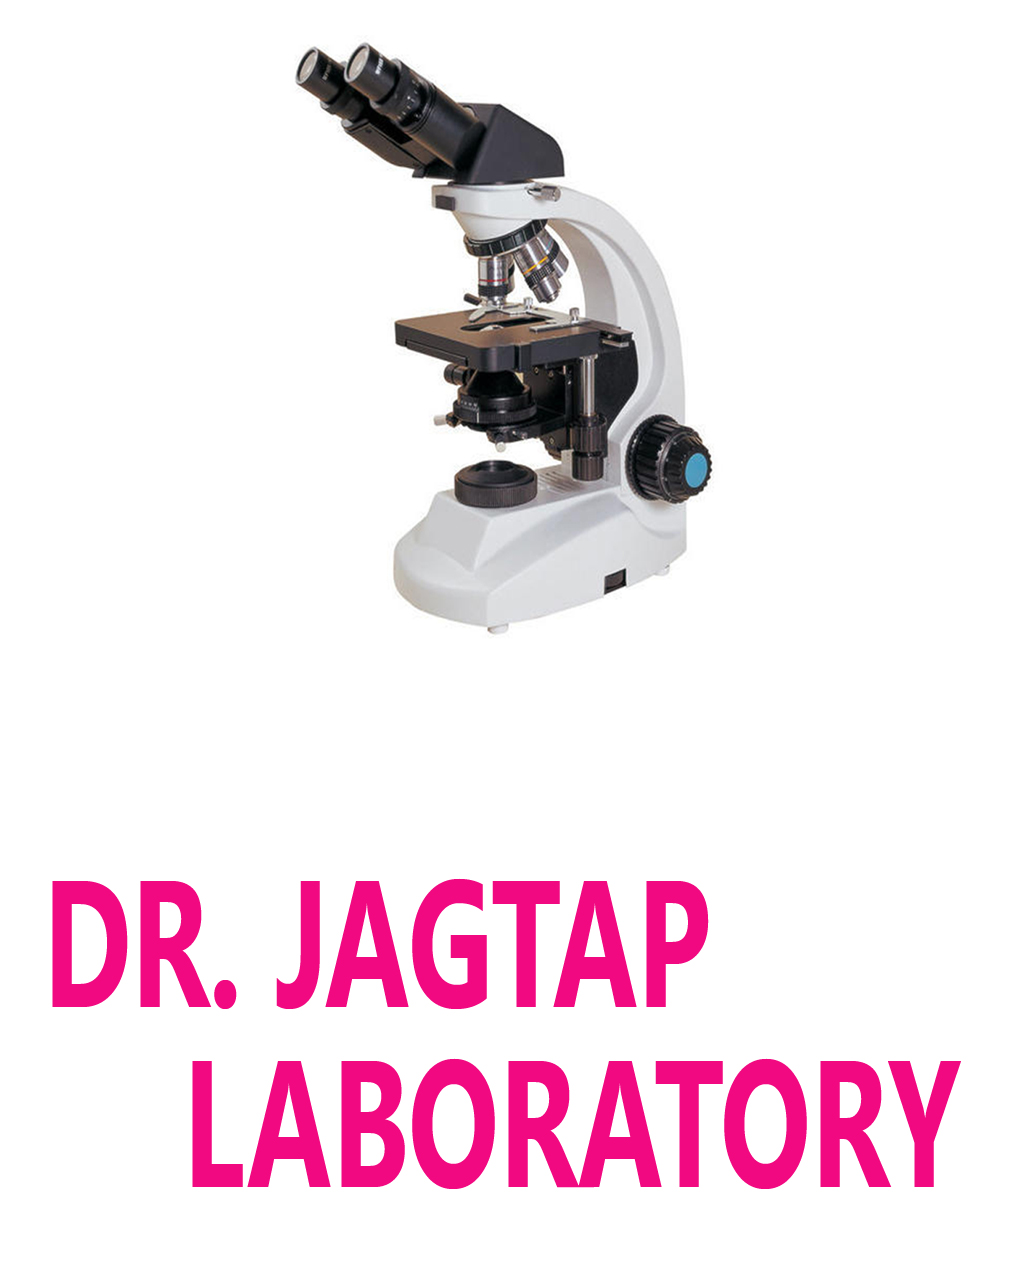 DR. JAGTAP LABORATORY